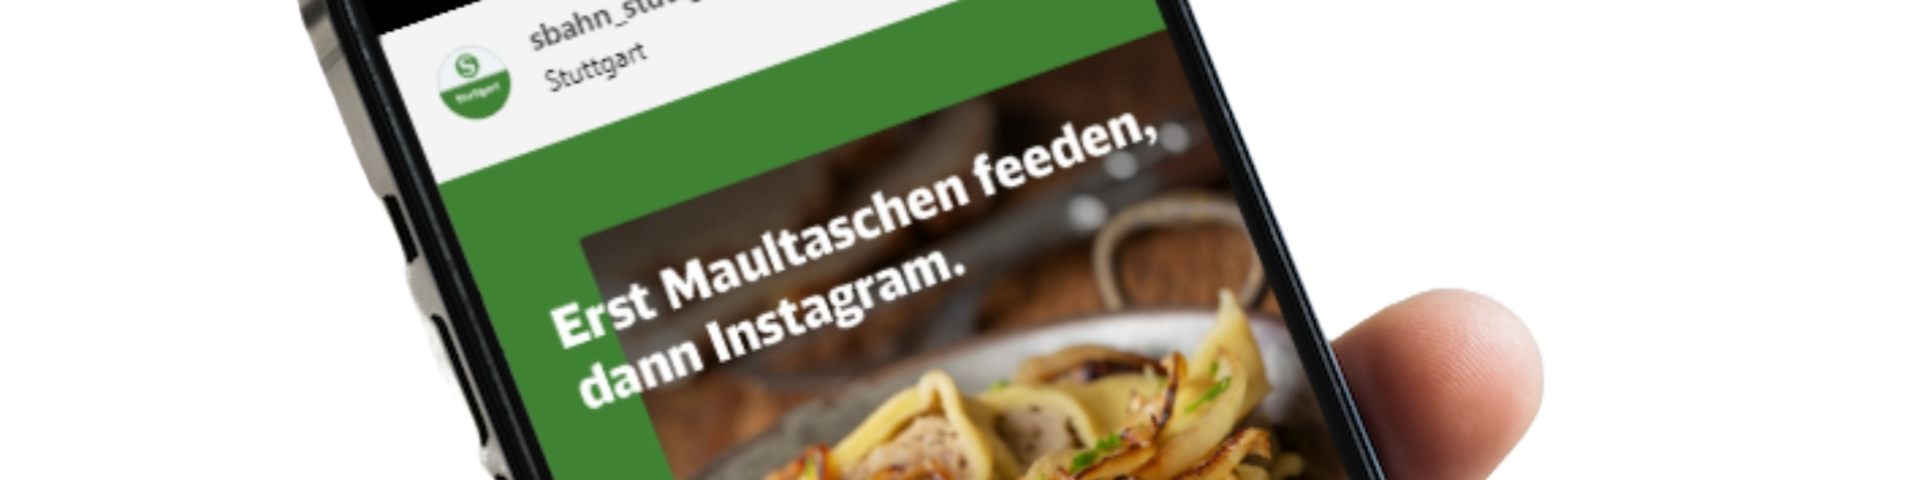 Instagram Post S-Bahn Stuttgart: Erst Maultaschen feeden, dann Instagram.